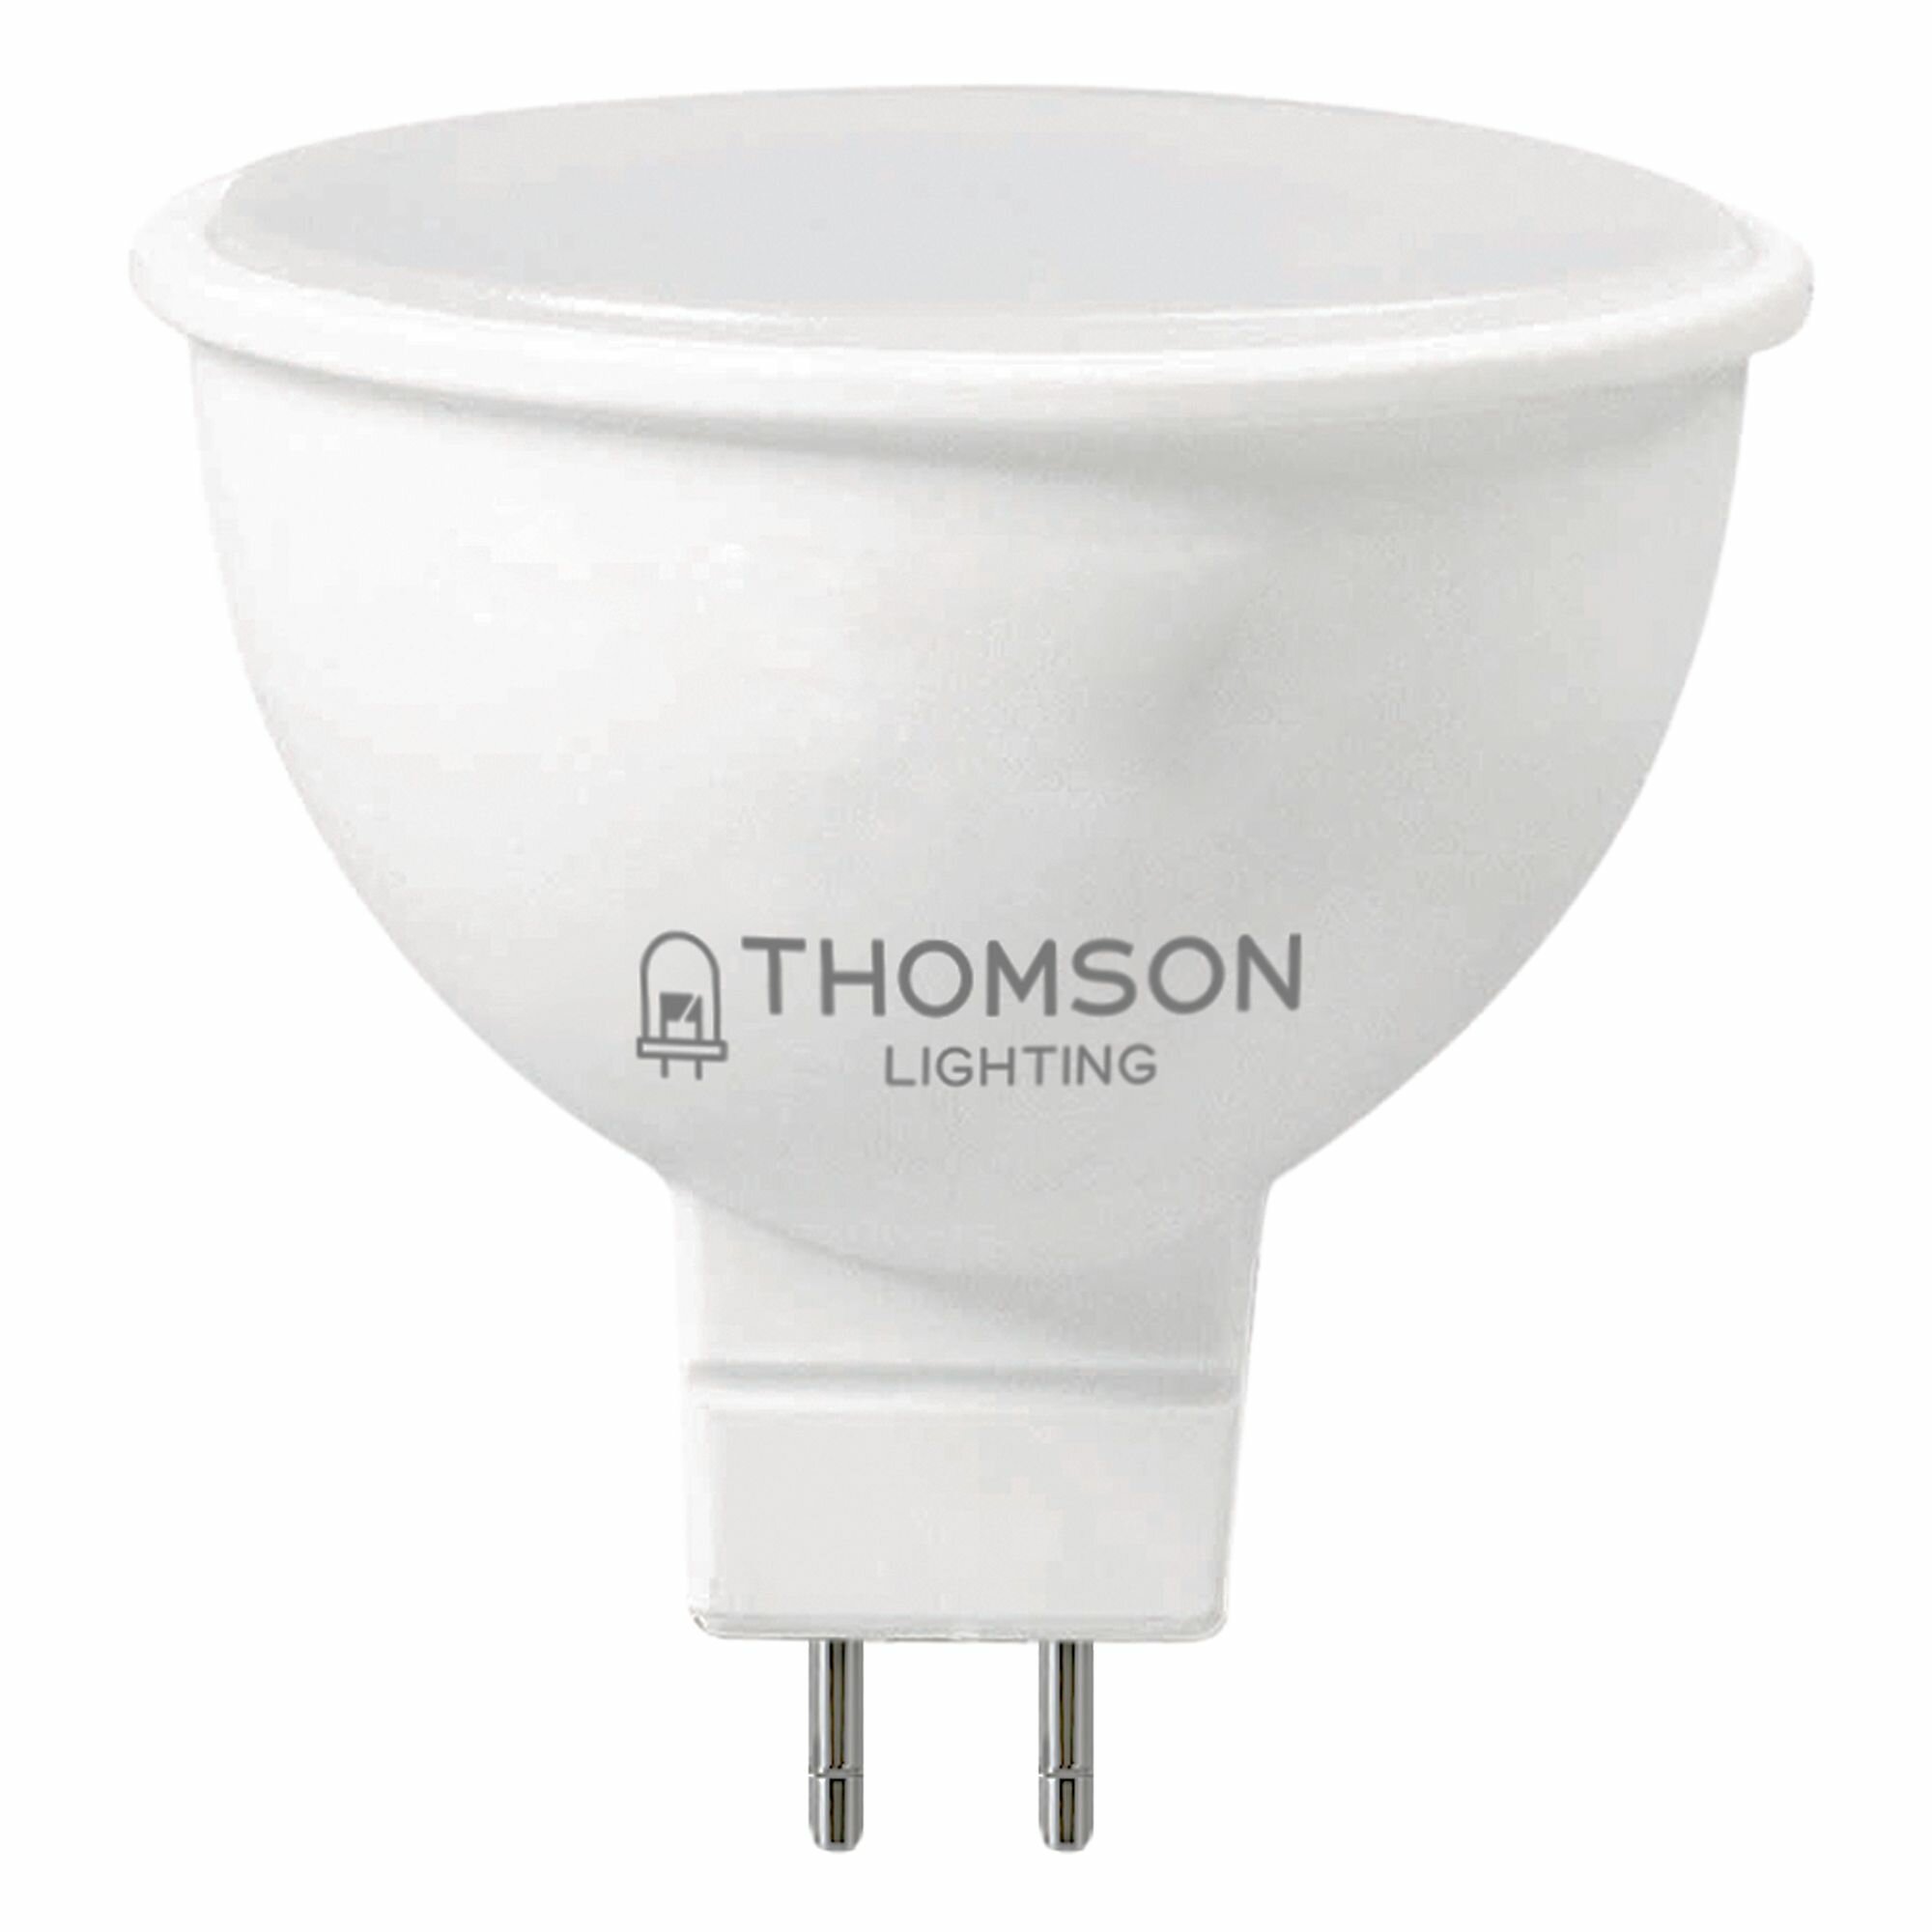 Лампочка Thomson TH-B2044 4 Вт, GU 5.3, 4000K, MR16, полусфера, нейтральный белый свет